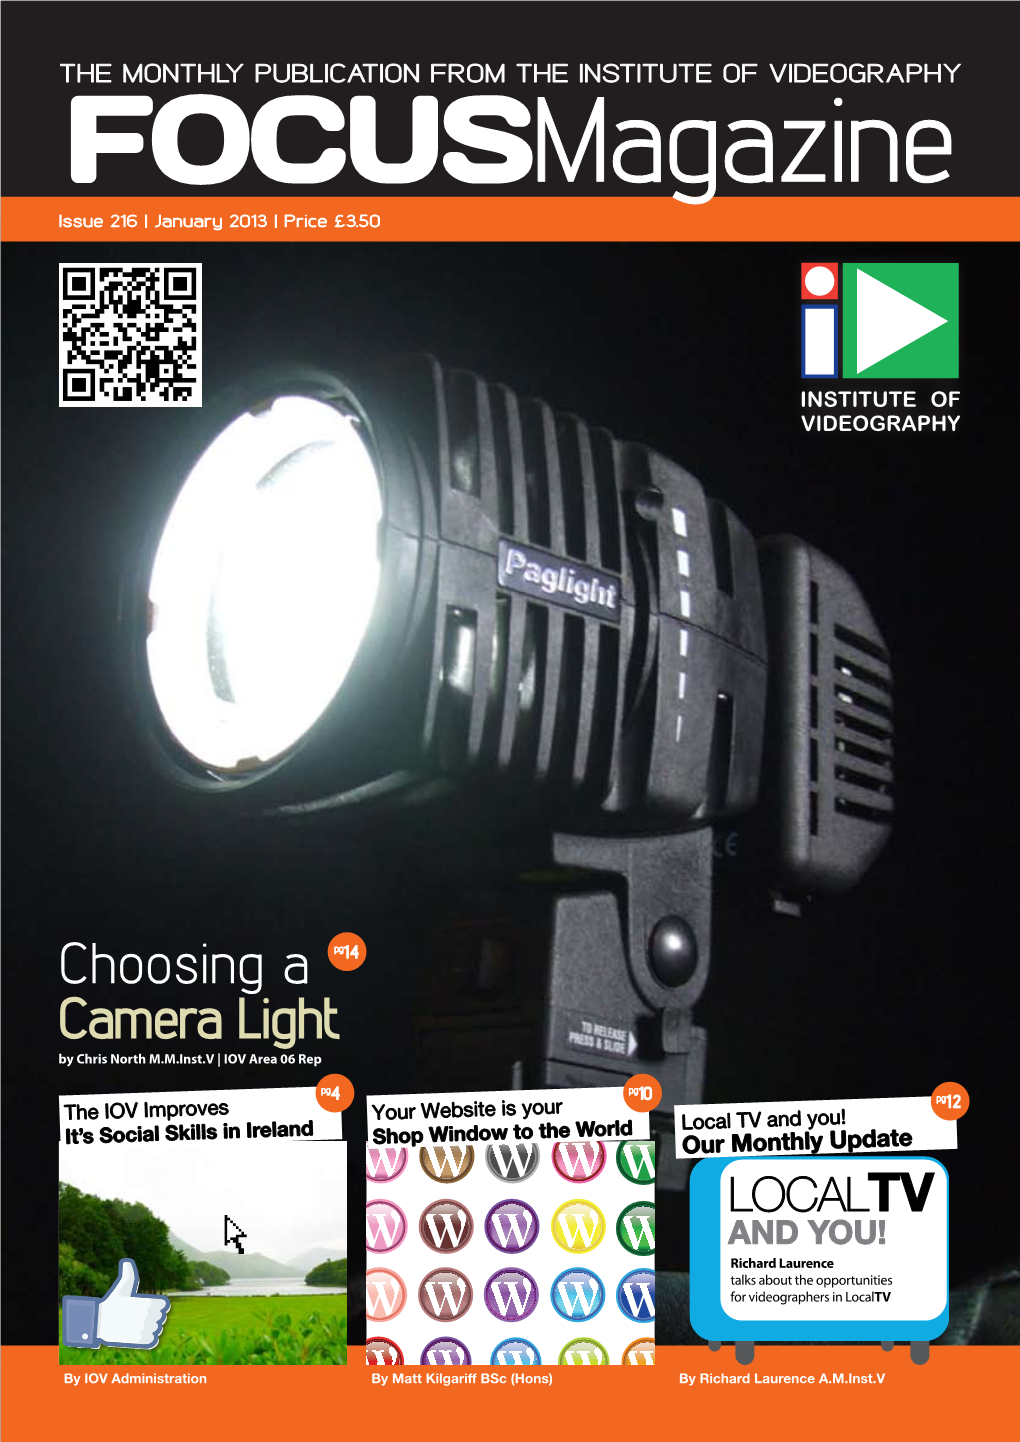 Choosing a Pg14 Camera Light by Chris North M.M.Inst.V | IOV Area 06 Rep